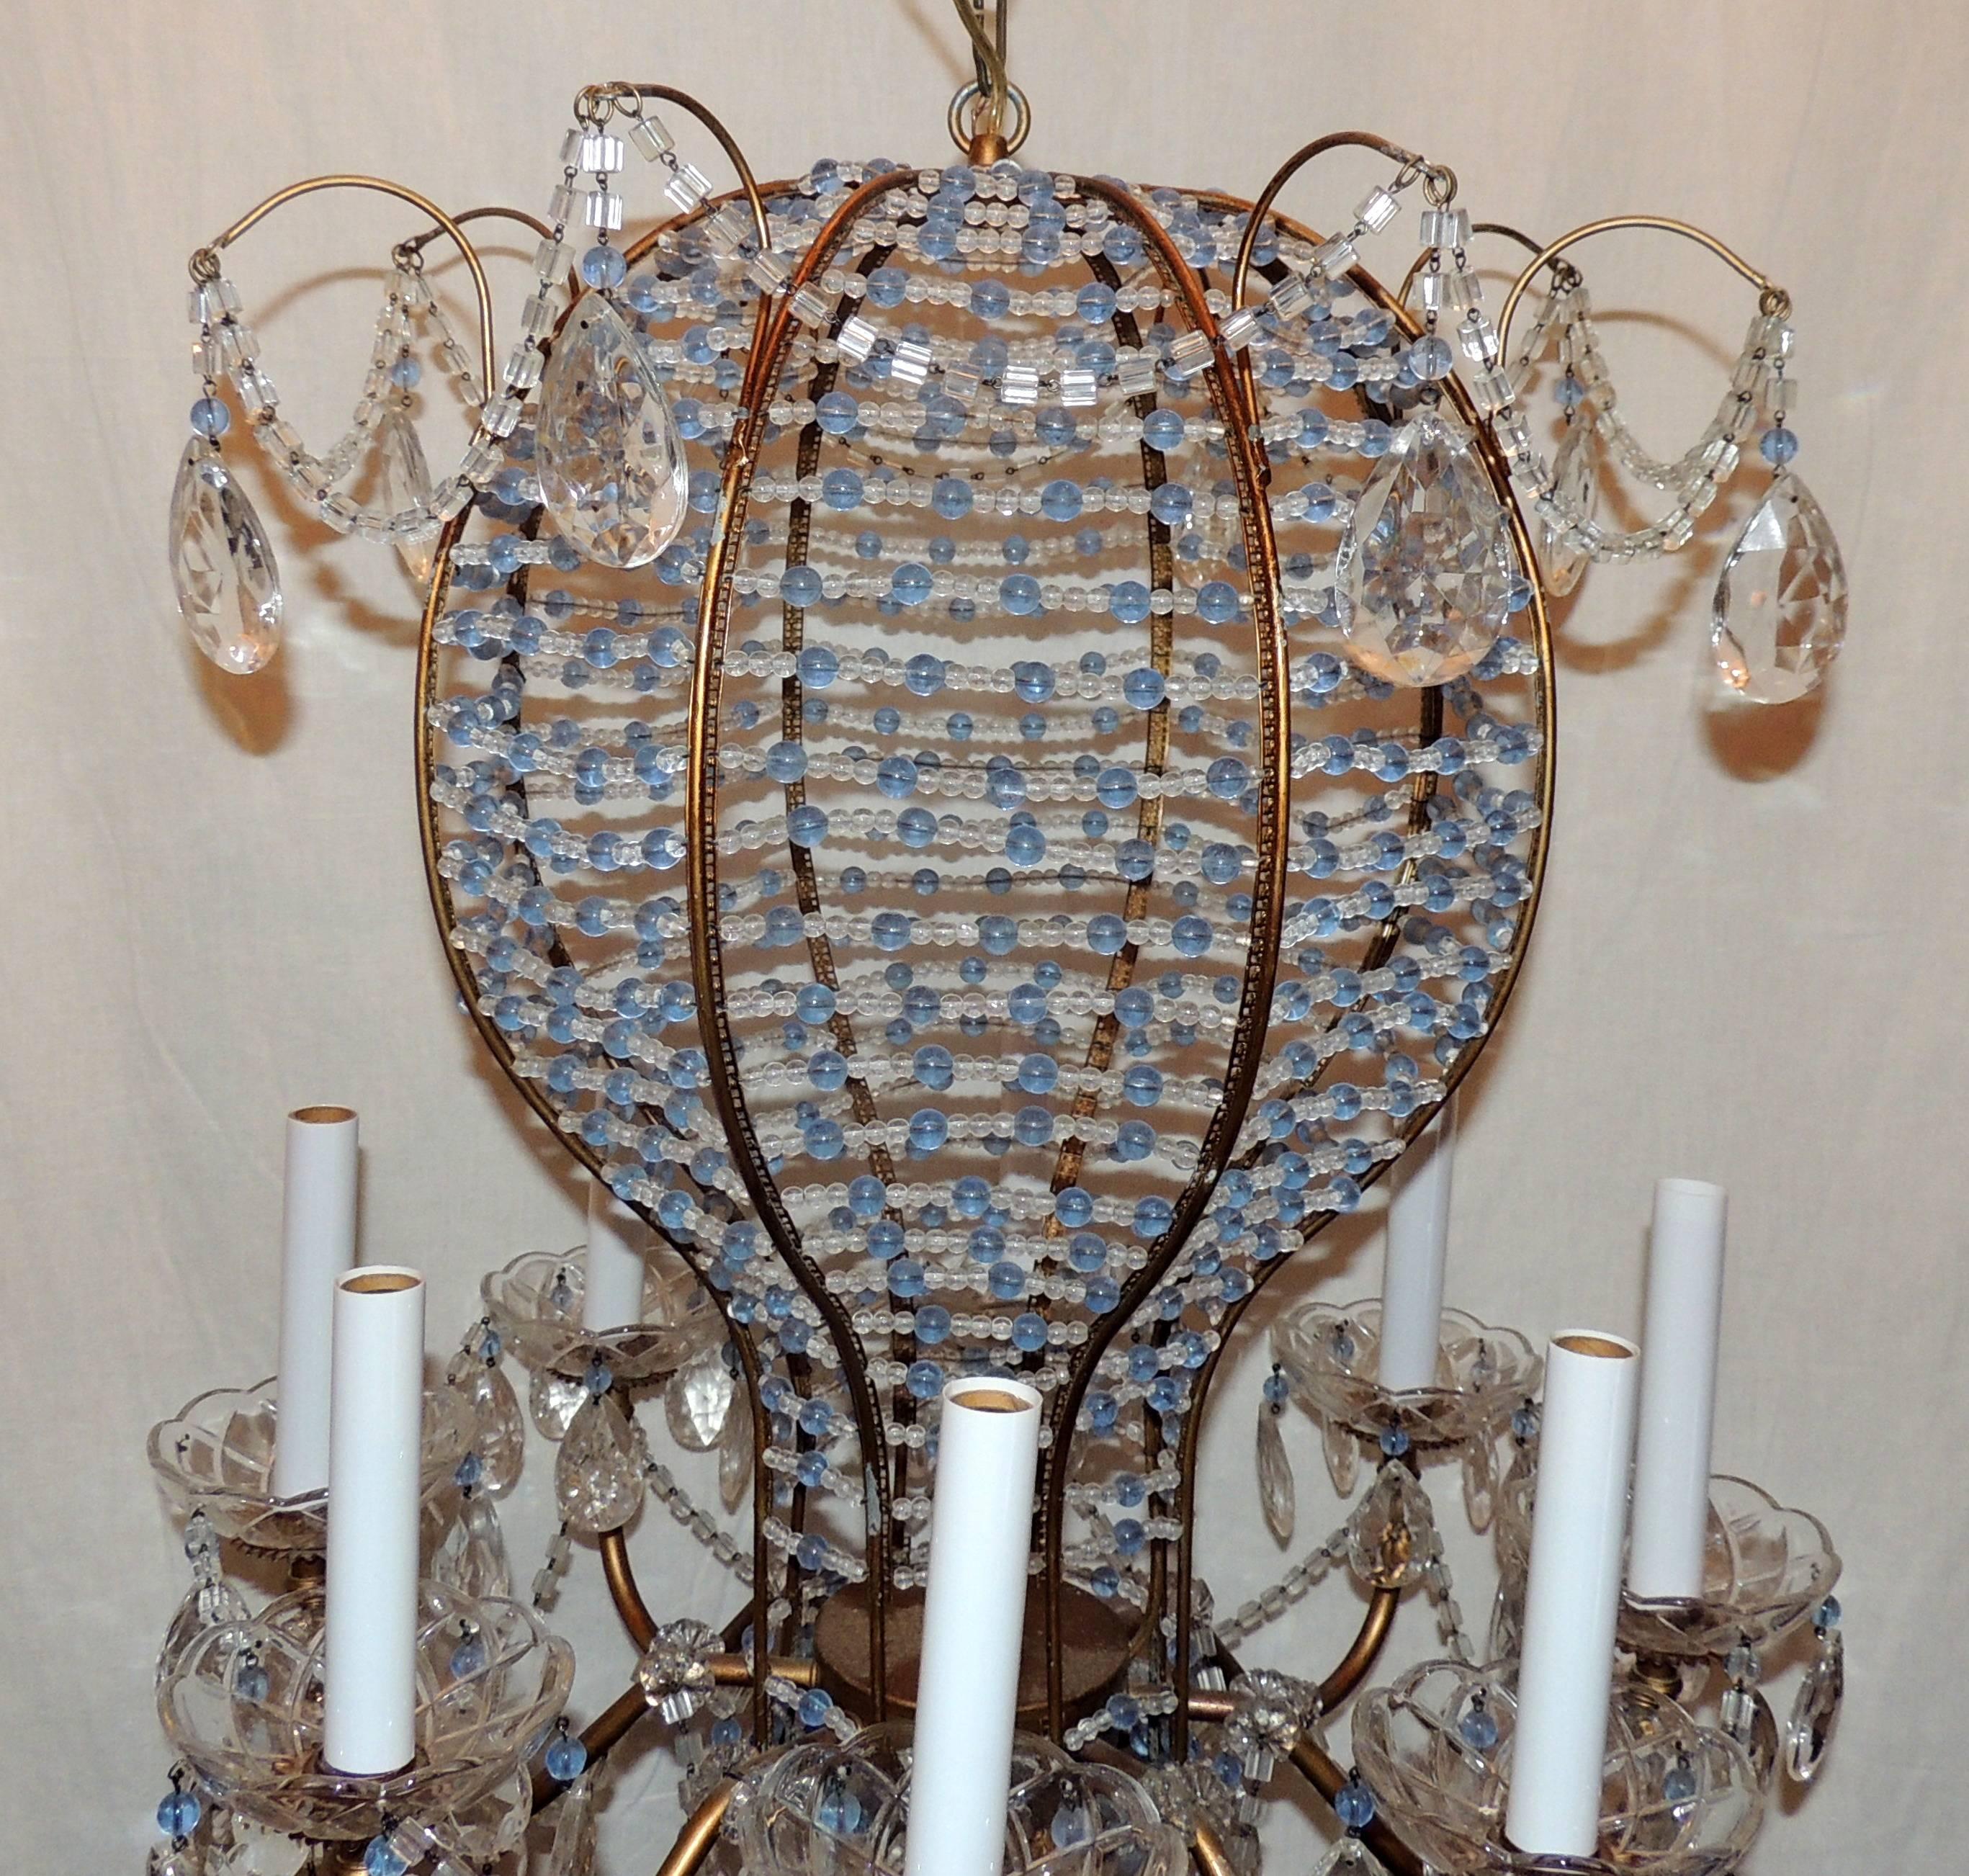 A fine beaded Italian baby blue and clear crystal hot air balloon chandelier eight-light fixture.
 